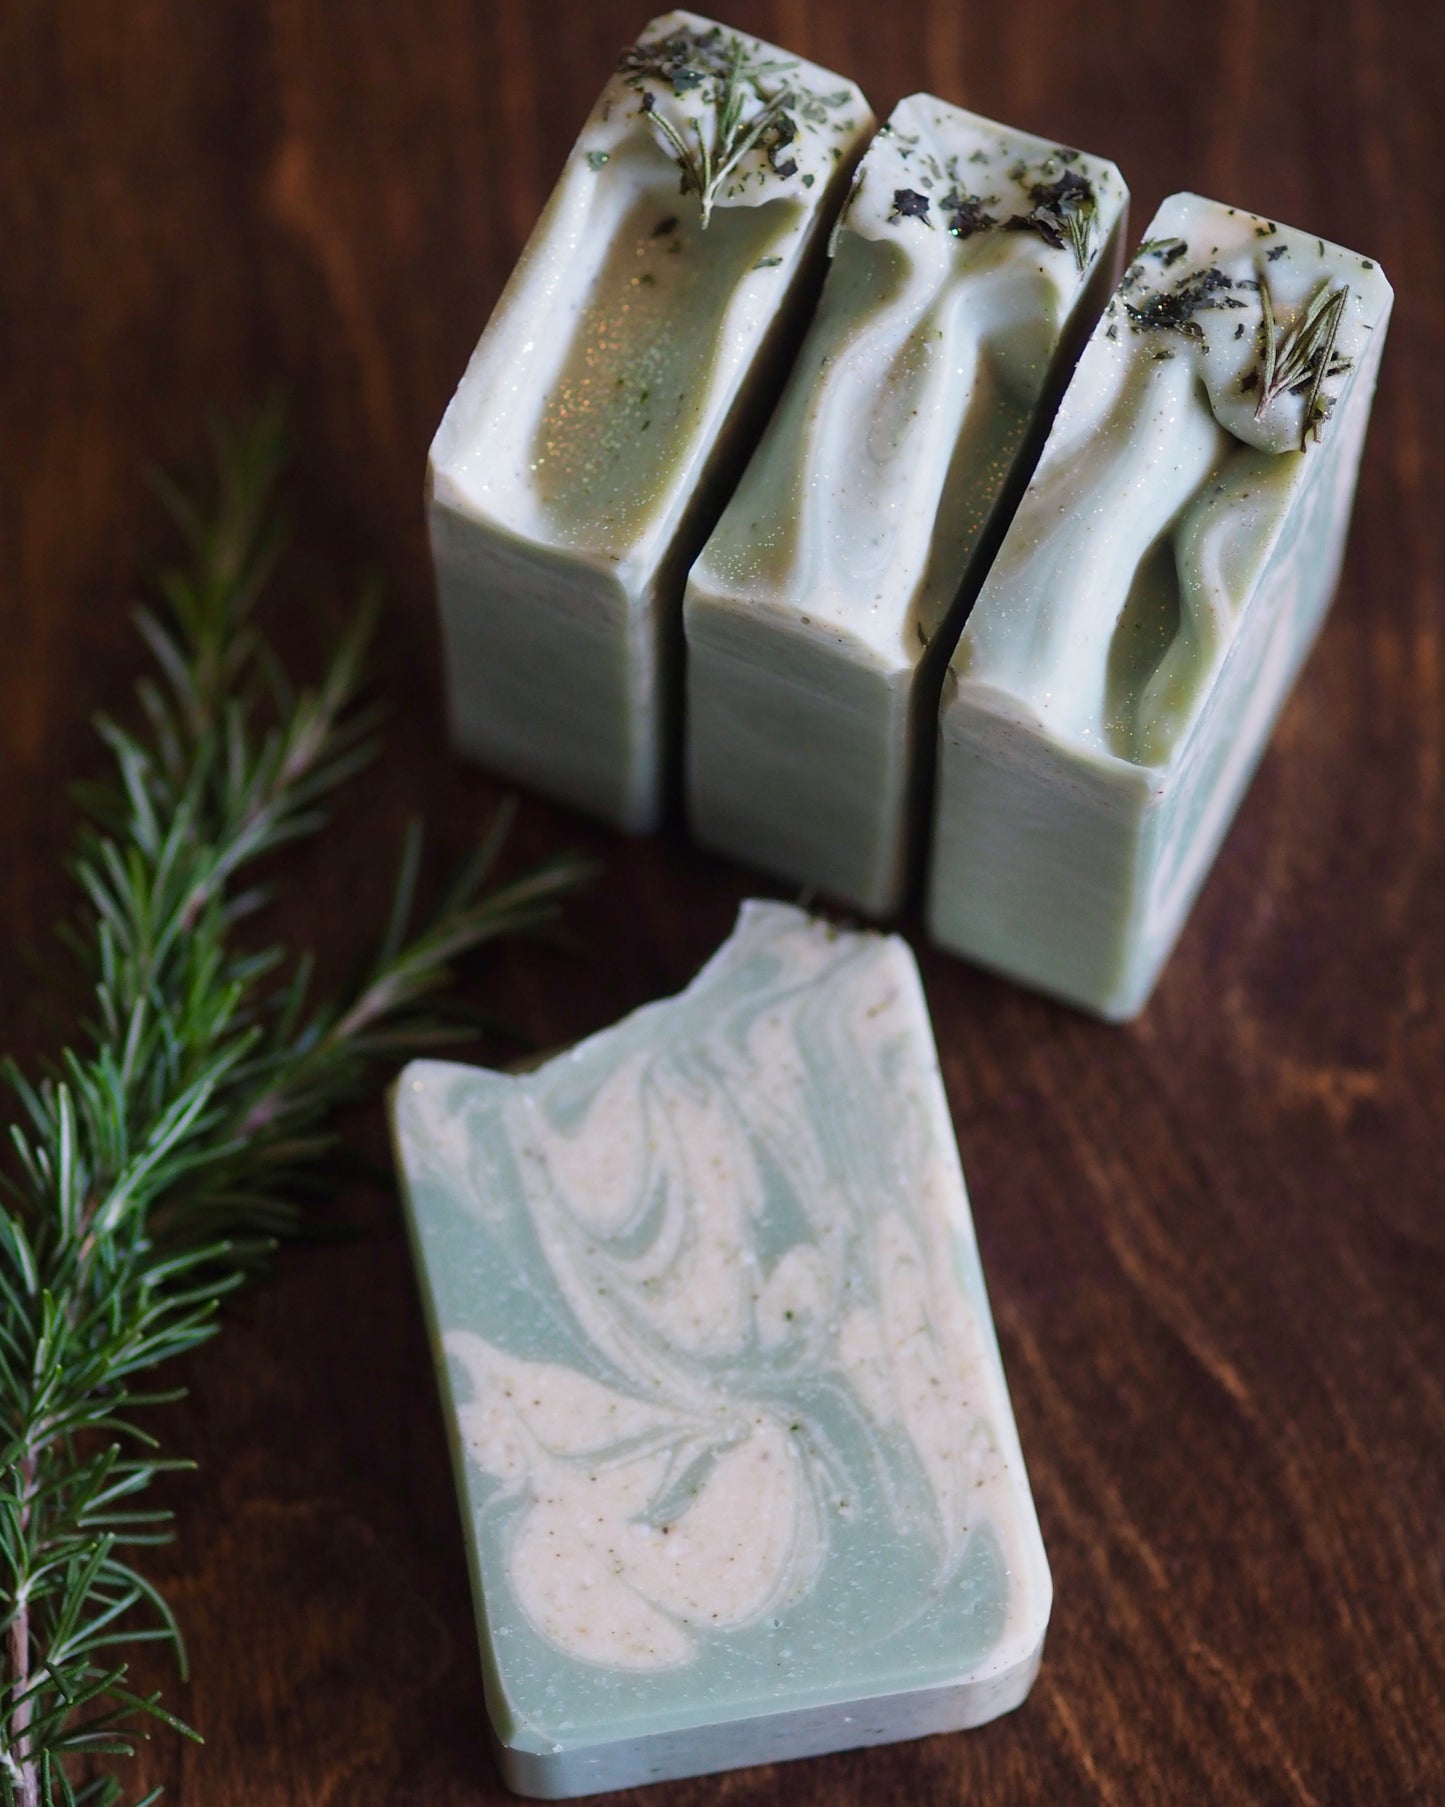 Garden Mint & Rosemary - Homegrown Organic Peppermint and Rosemary - Handmade Vegan Soap